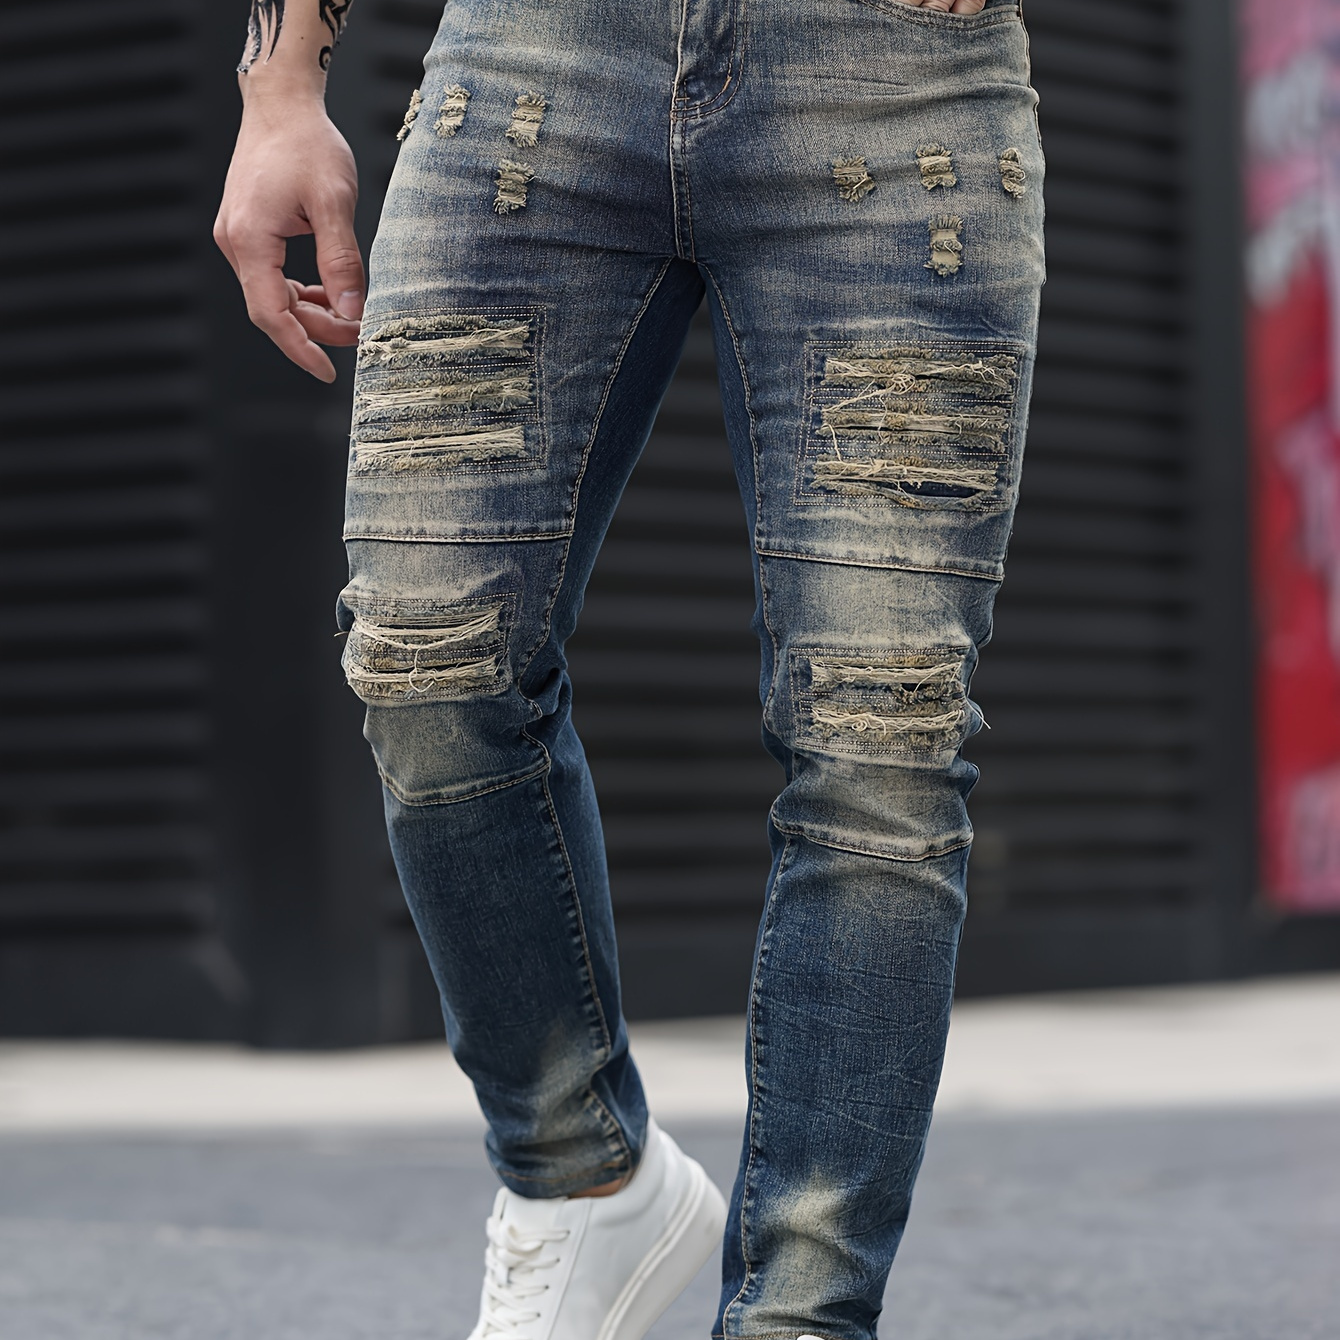 

Gradient Ripped Design Cotton Blend Jeans, Men's Casual Street Style Skinny Slim Denim Pants For Spring Summer